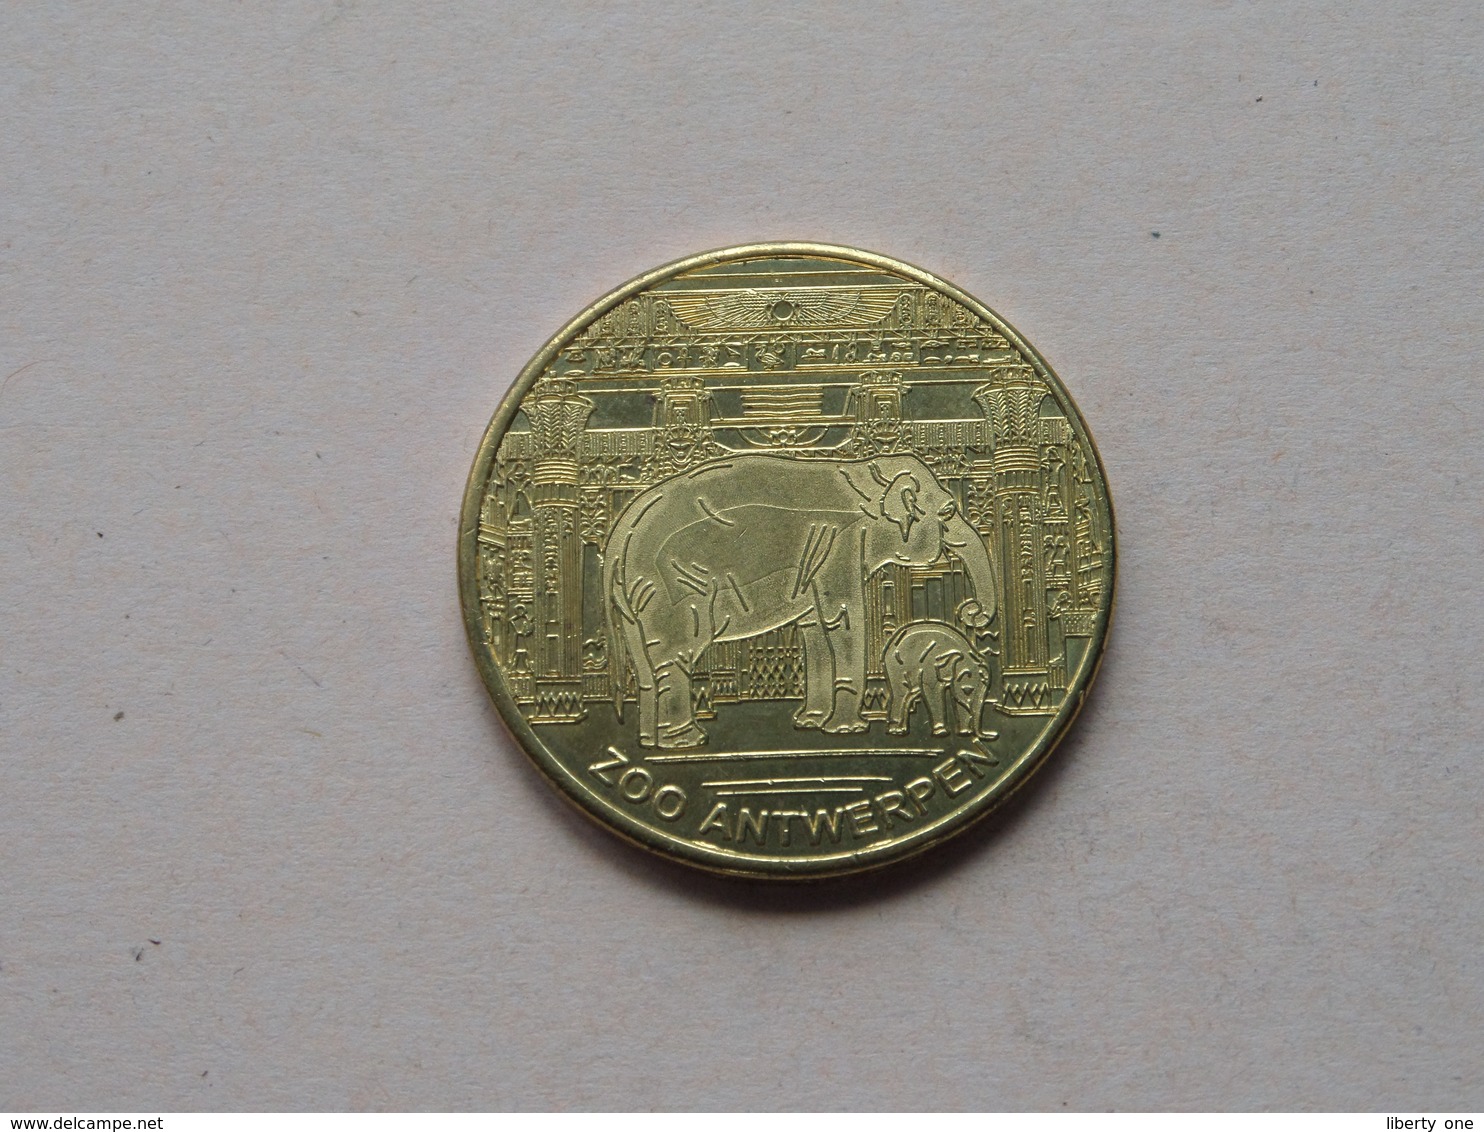 ZOO Antwerpen 2010 /  Belgian Heritage - National Tokens B () België / Goudkleur ! - Souvenir-Medaille (elongated Coins)